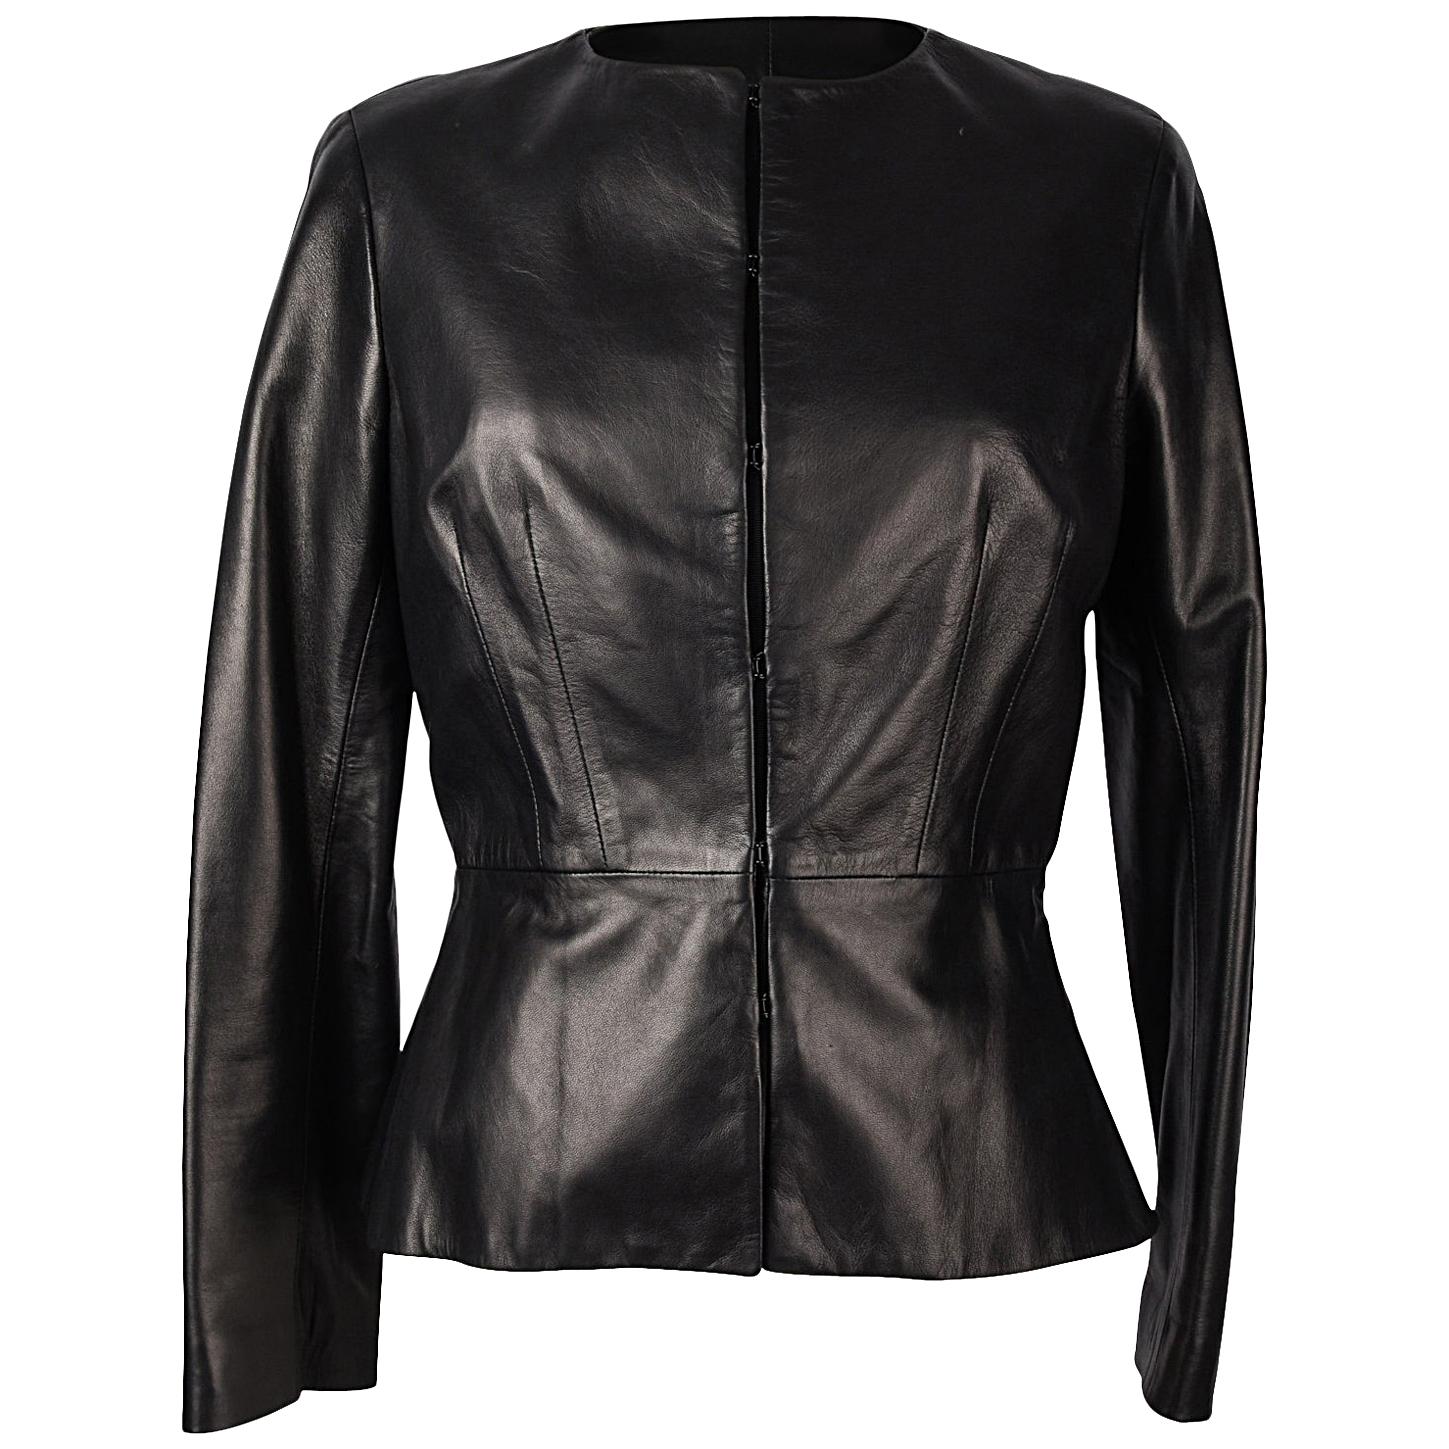 Carolina Herrera Jacket Peplum Black Lambskin Leather Feather Light 8 mint